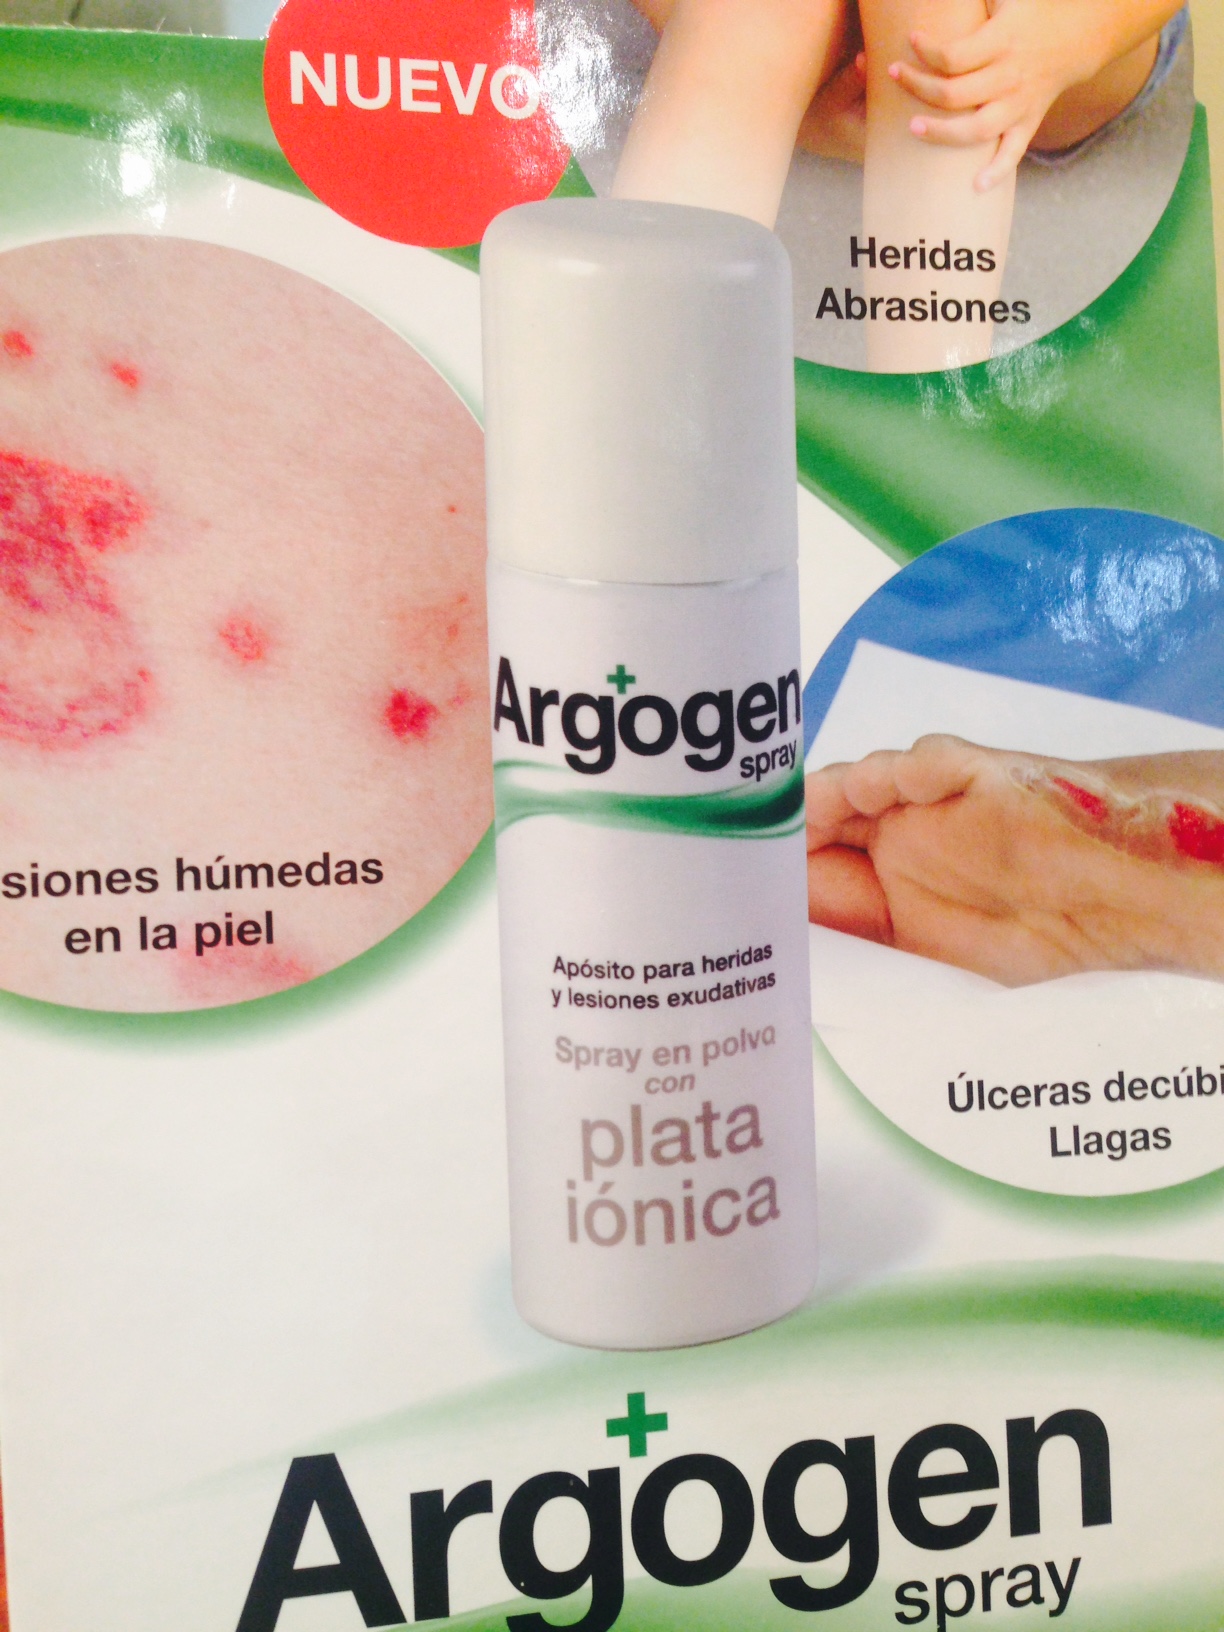 Argogen esprai per ferides i lesions exudatives